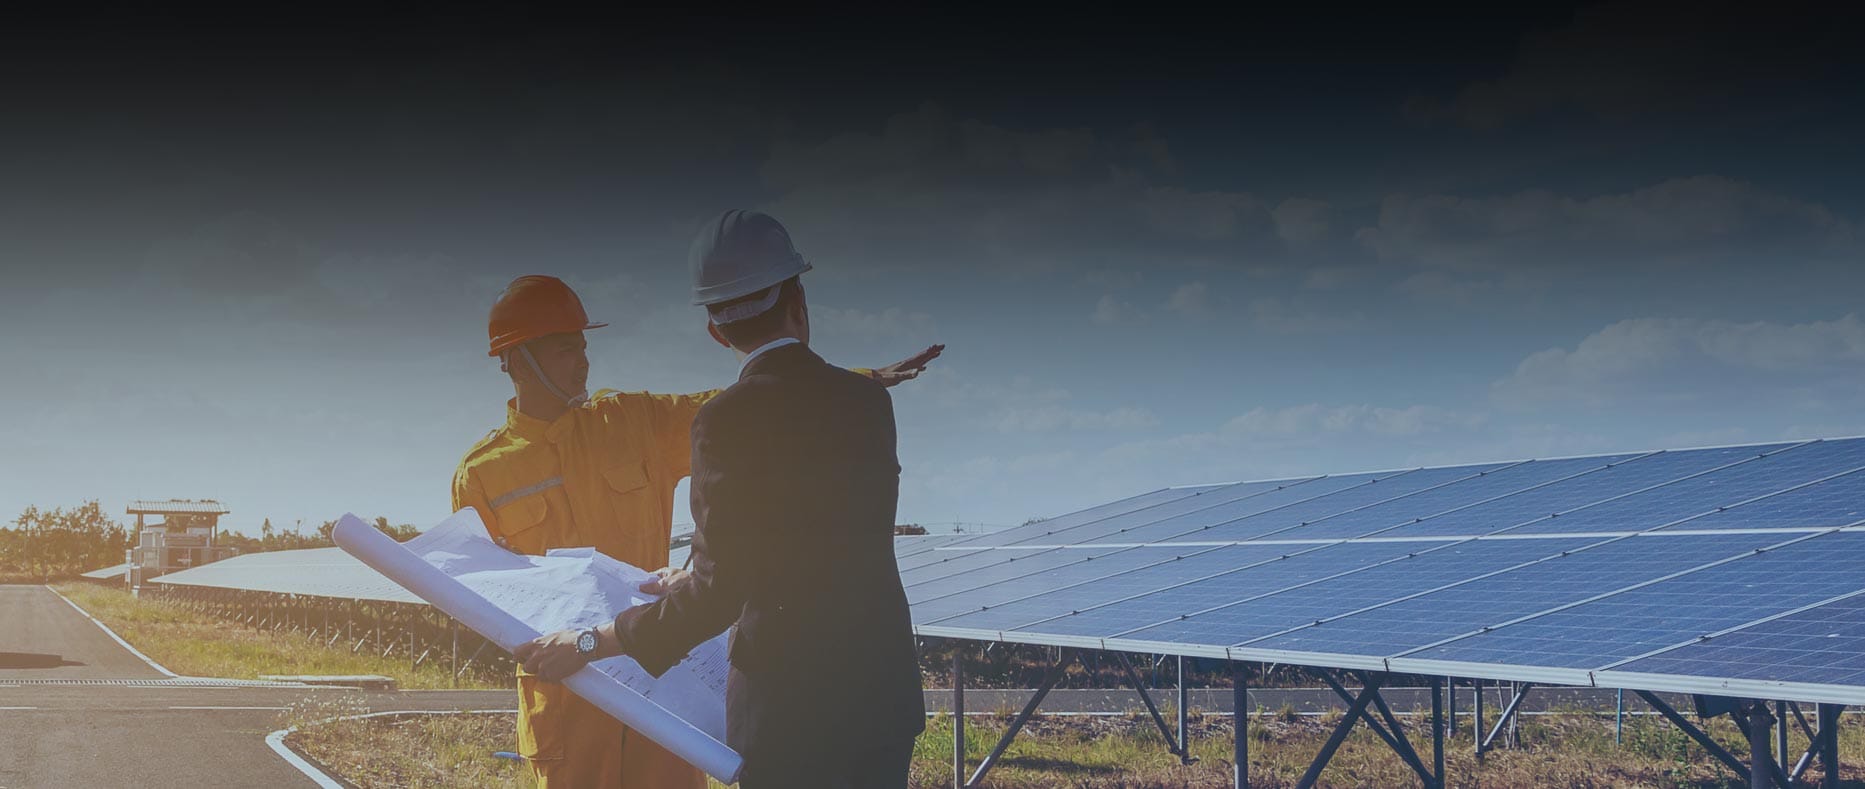 Corporate Social Responsibility - Solar Energy